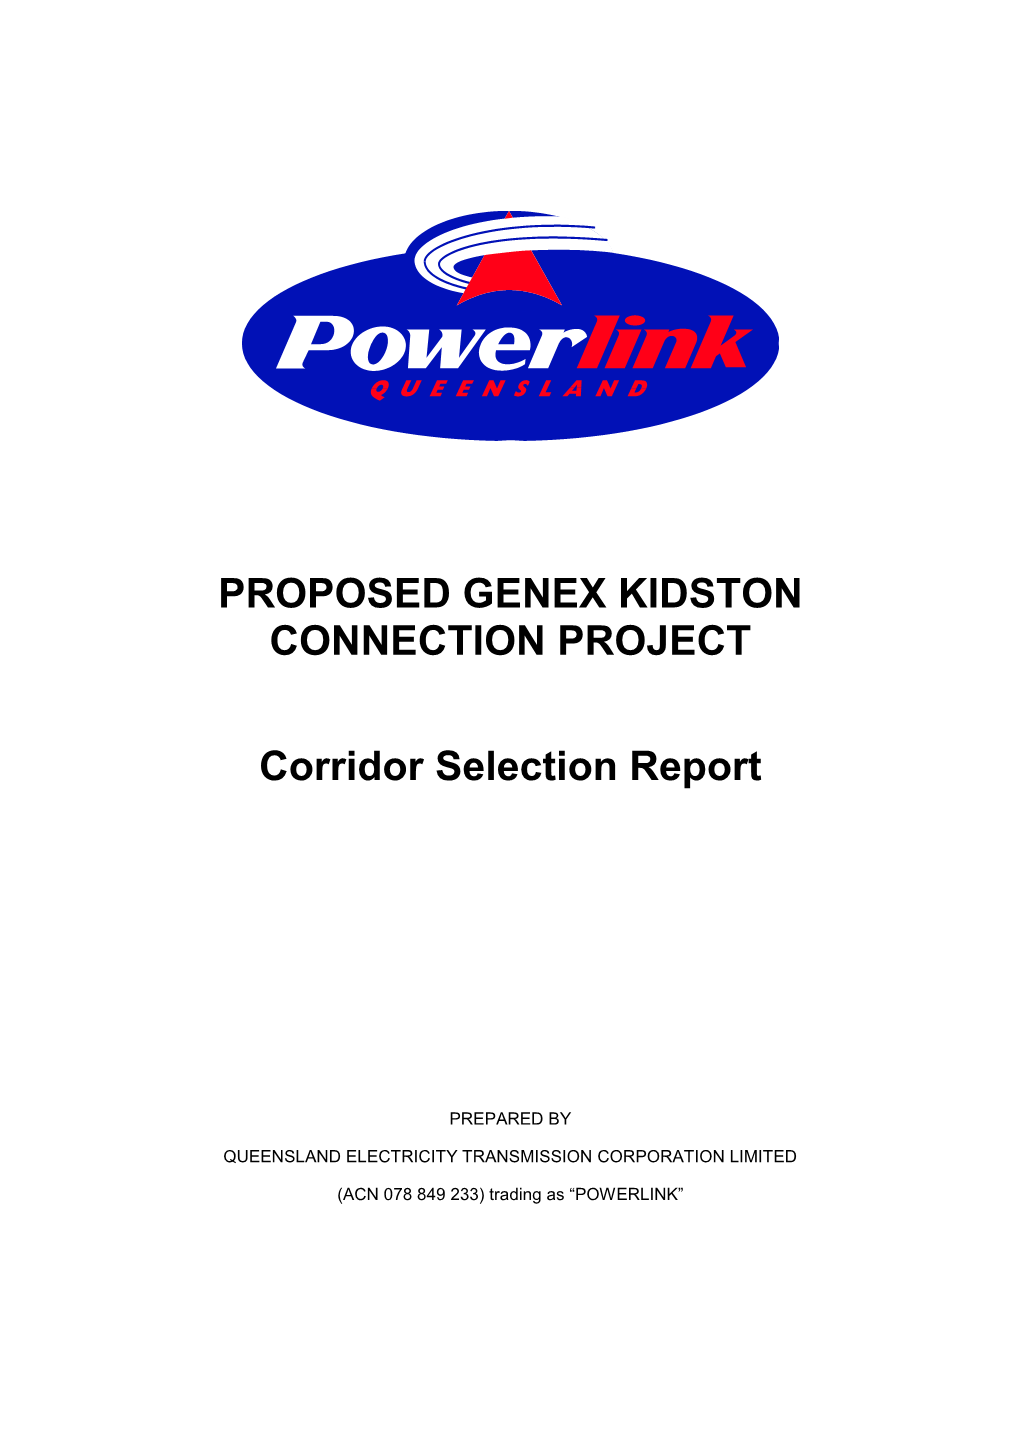 PROPOSED GENEX KIDSTON CONNECTION PROJECT Corridor